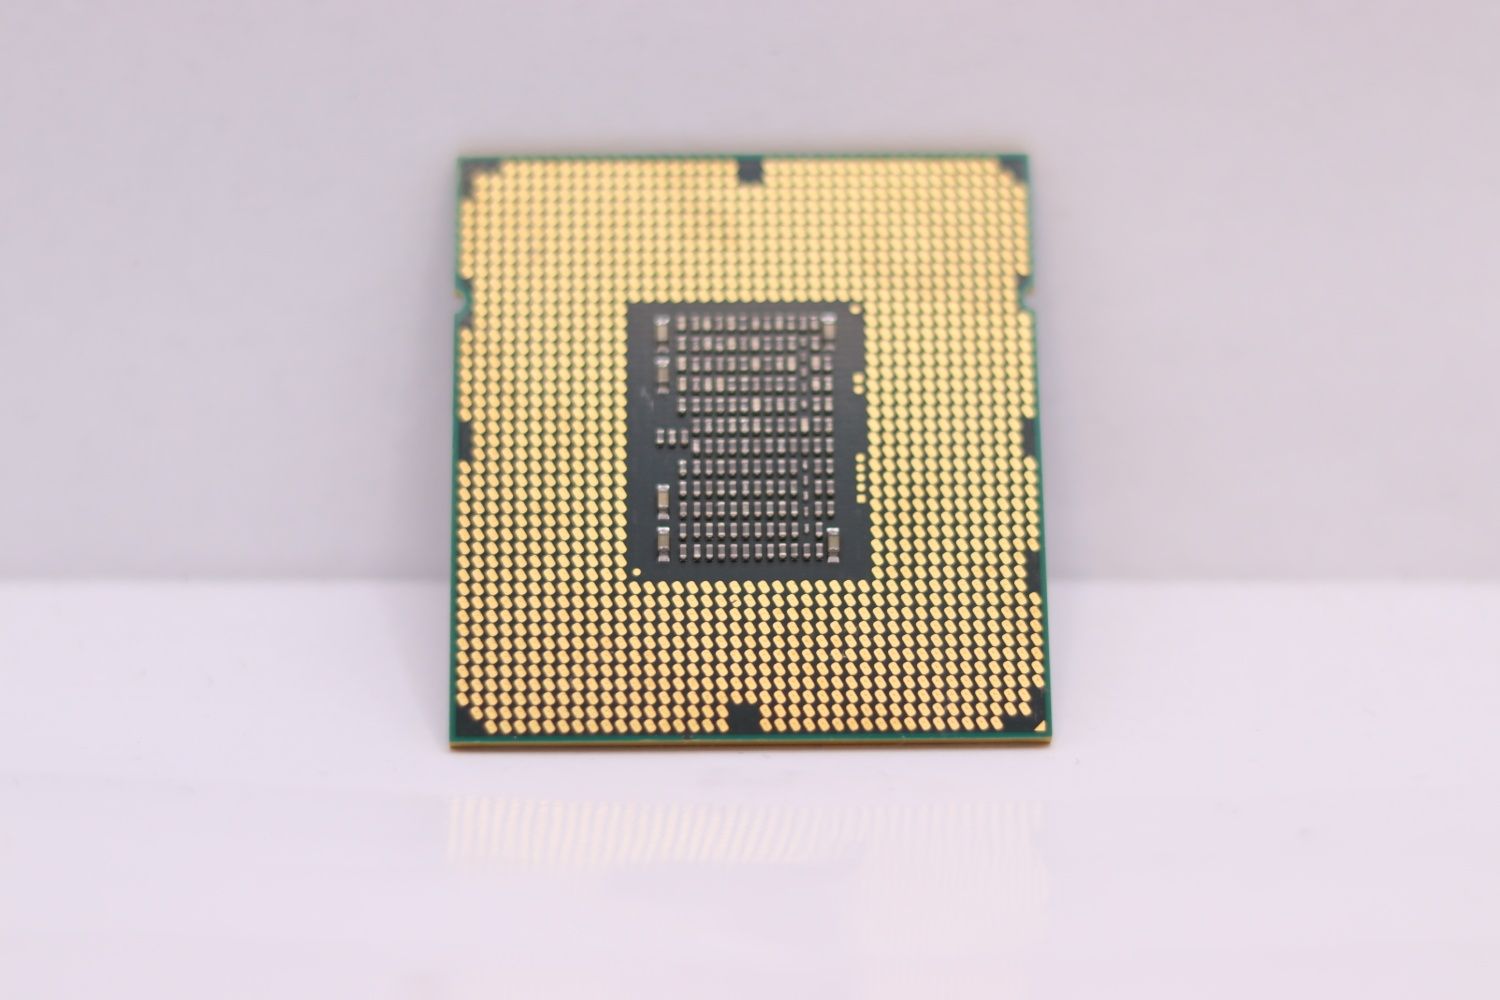 Procesor Intel Xeon 6 Cores X5650 Socket 1366 SLBV3 2.66 GHz